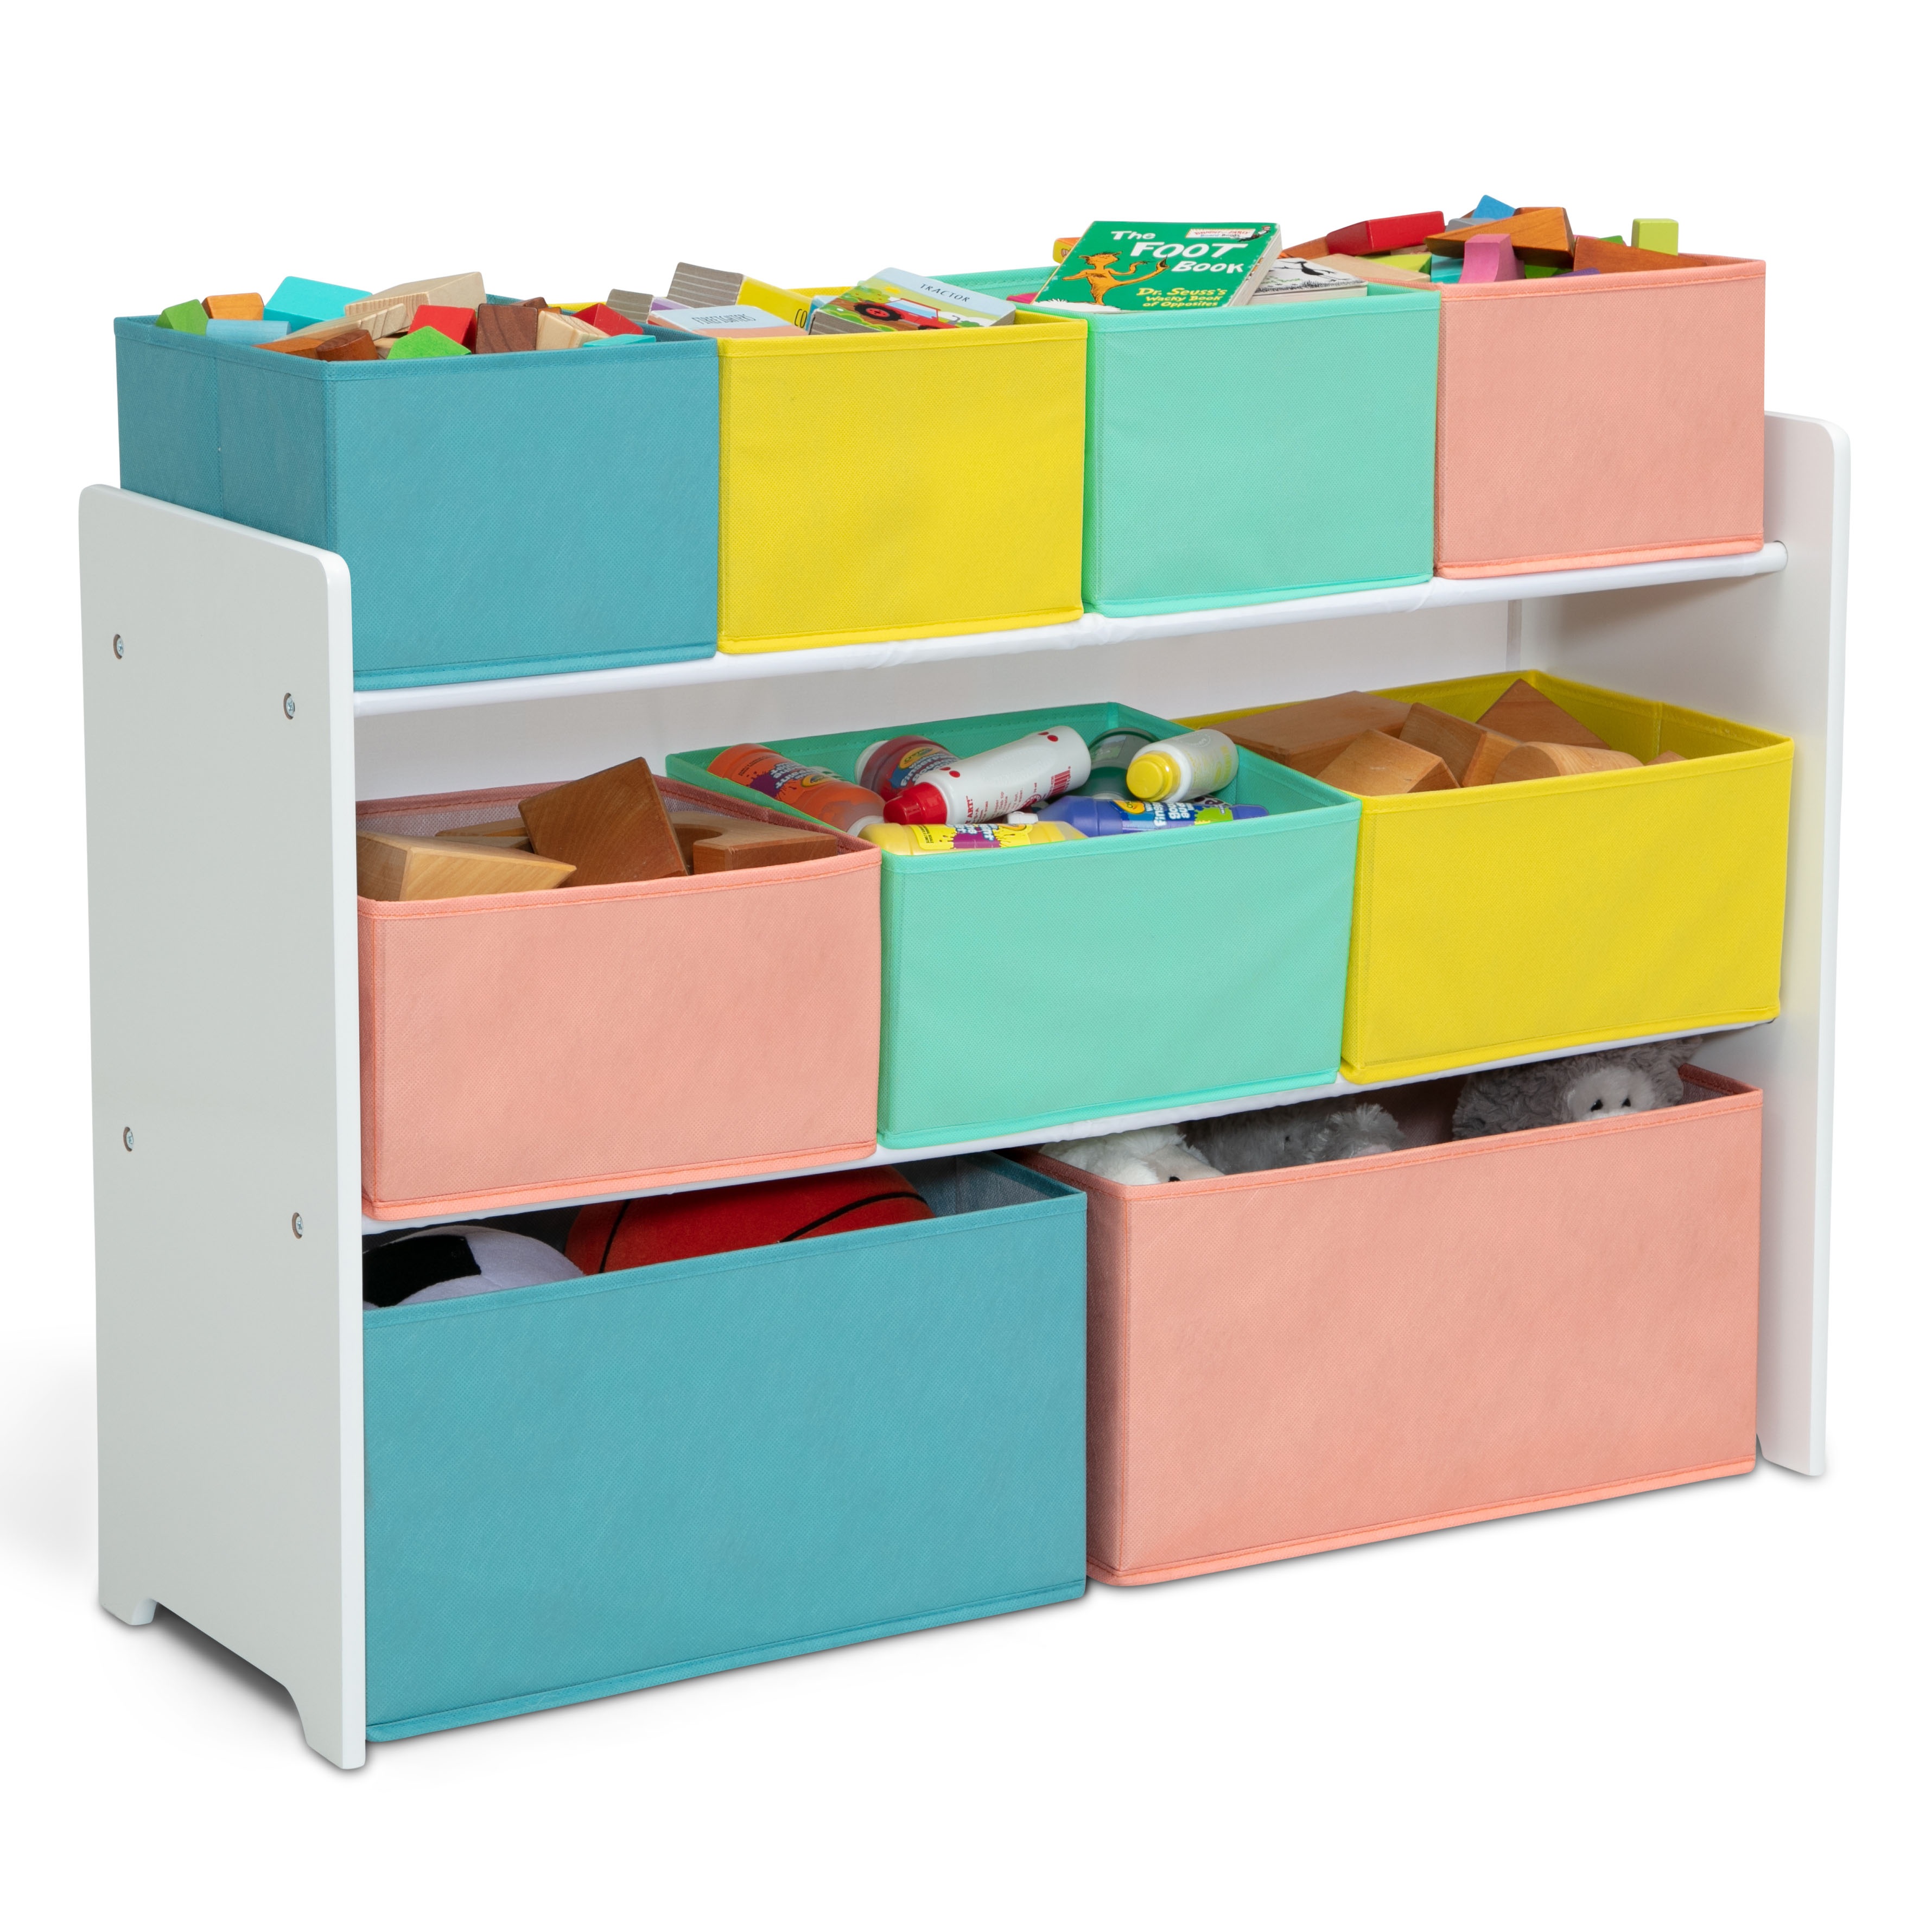 Delta Children Deluxe Multi-Bin Toy Organizer with Storage Bins - Greenguard Gold Certified, White with Blue/Orange/Pastel Bins - image 3 of 11